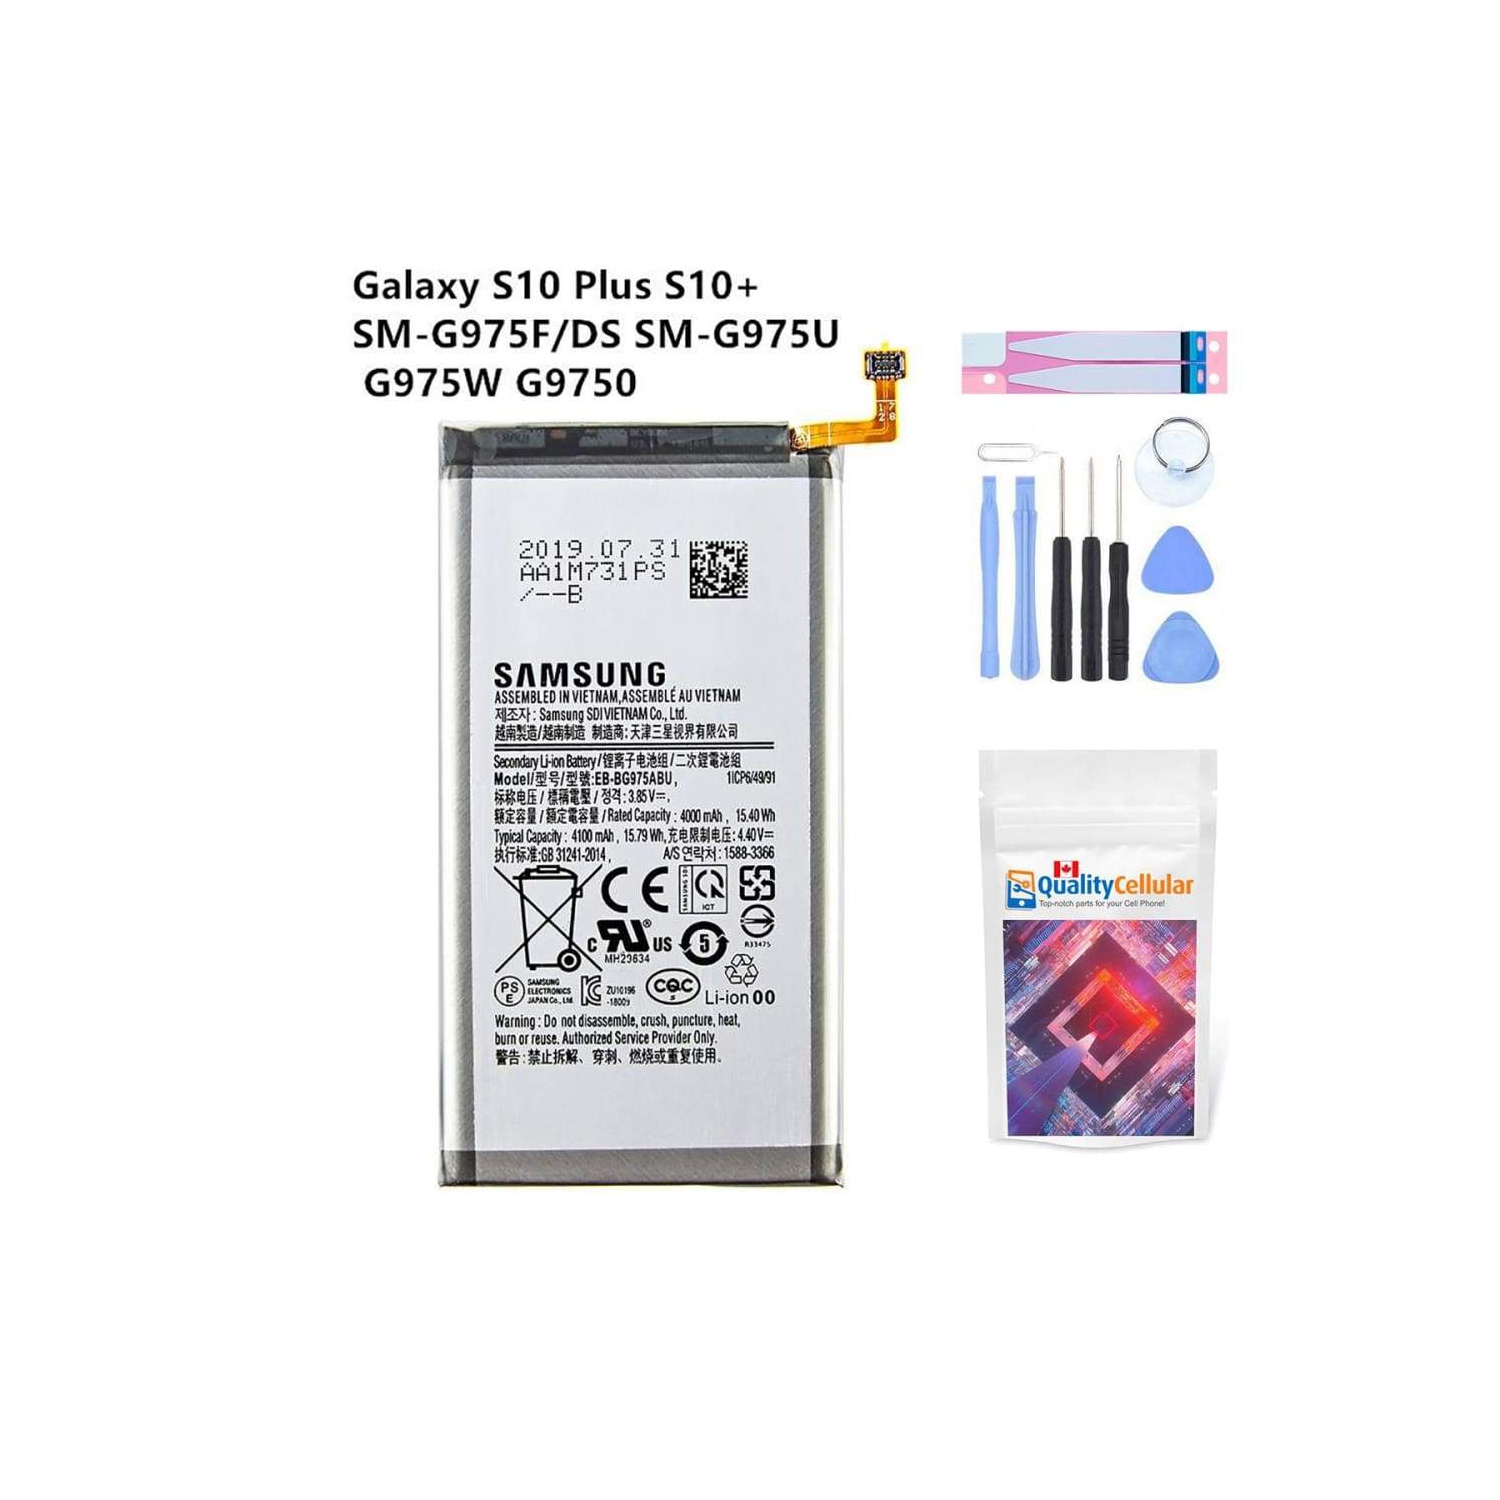 Original Samsung Galaxy S10 Plus battery EB-BG975ABU 4100 mAh for SM-G975W G975U